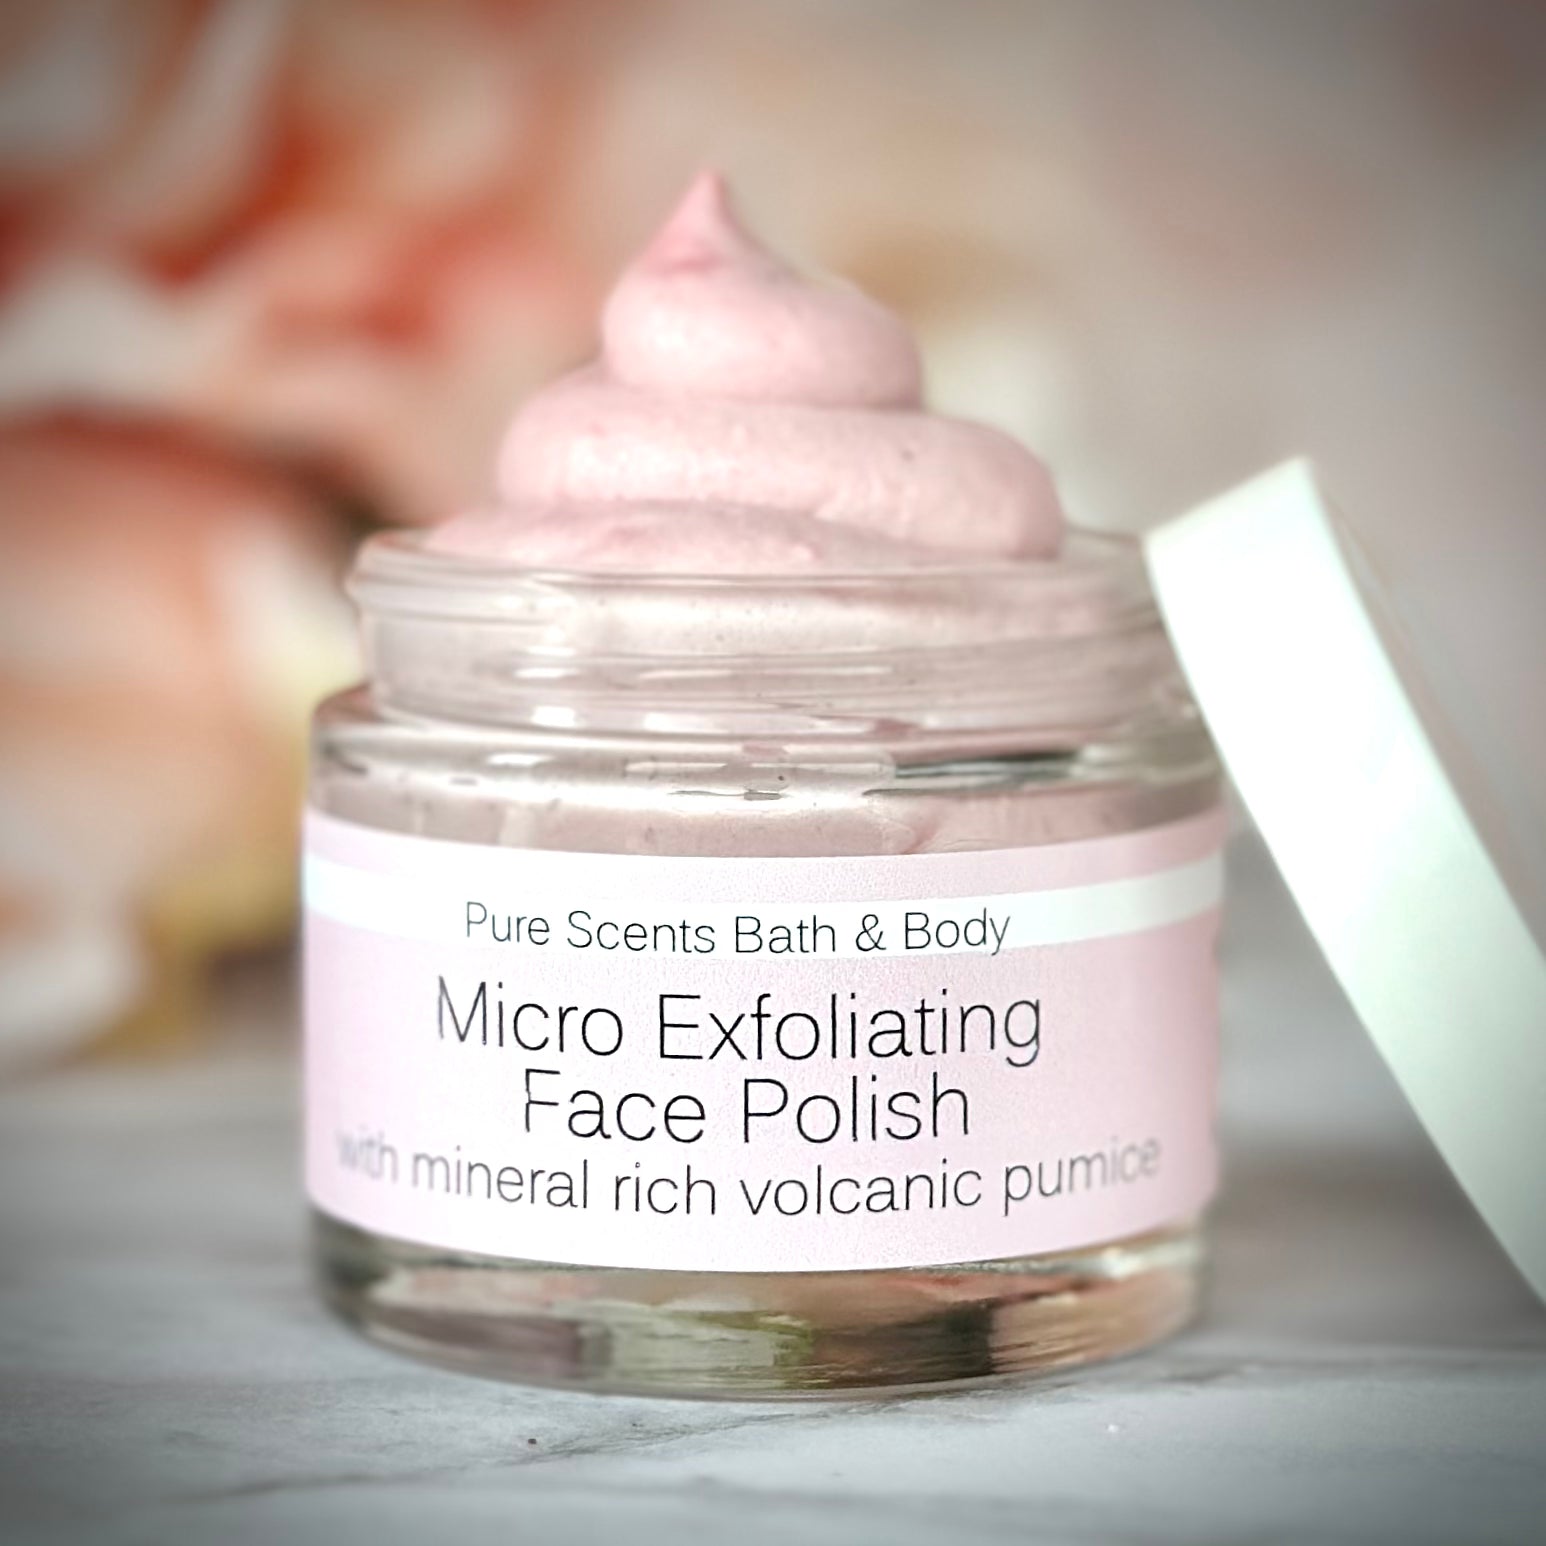 Micro Exfoliating Face Polish